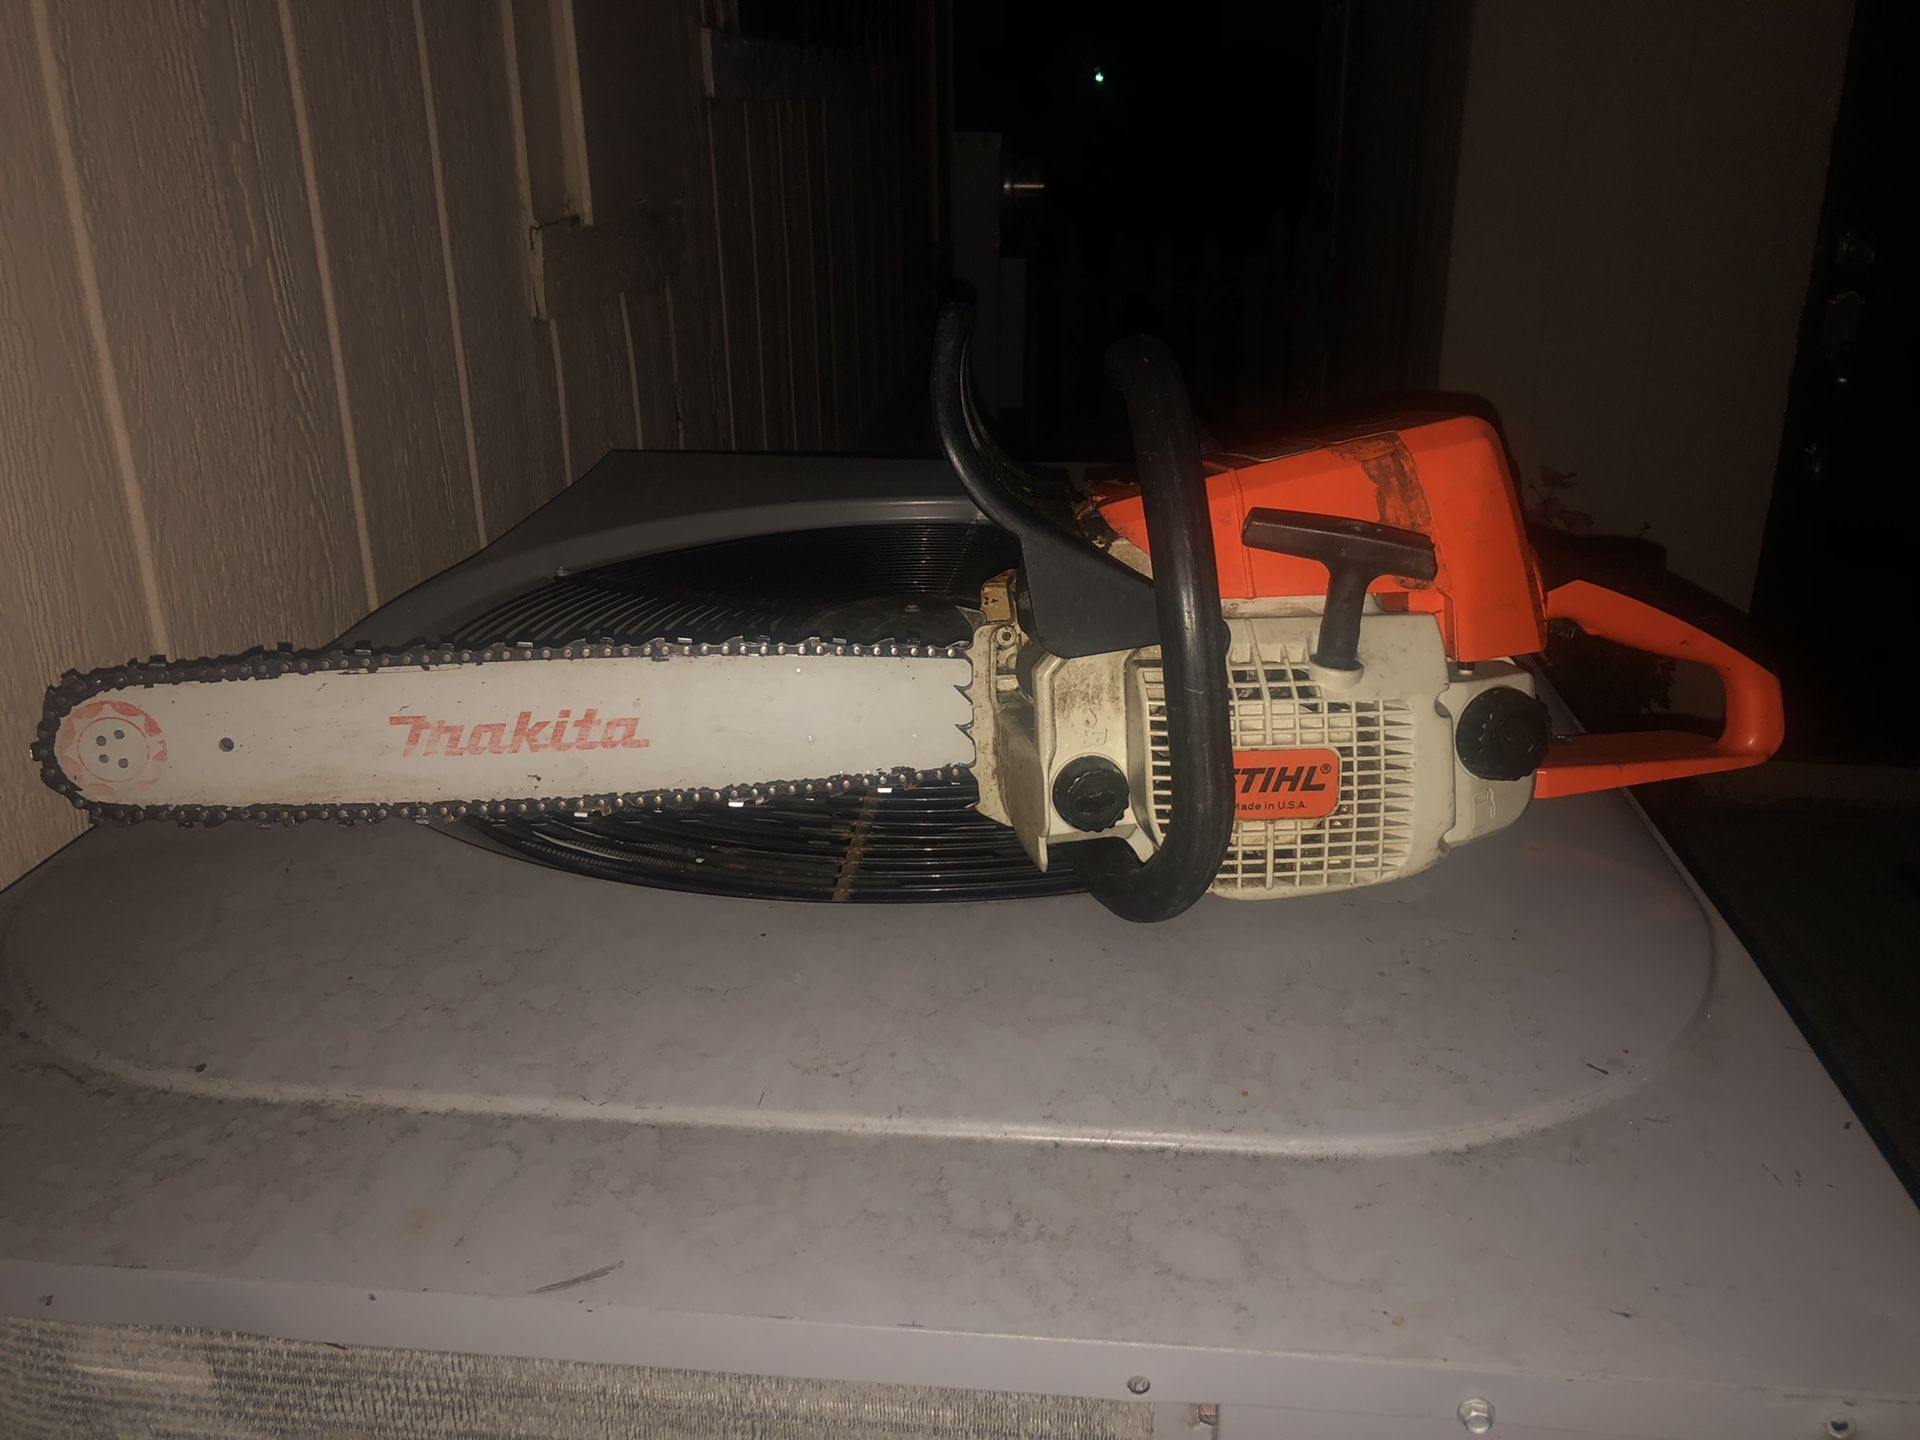 Stihl chainsaw 023